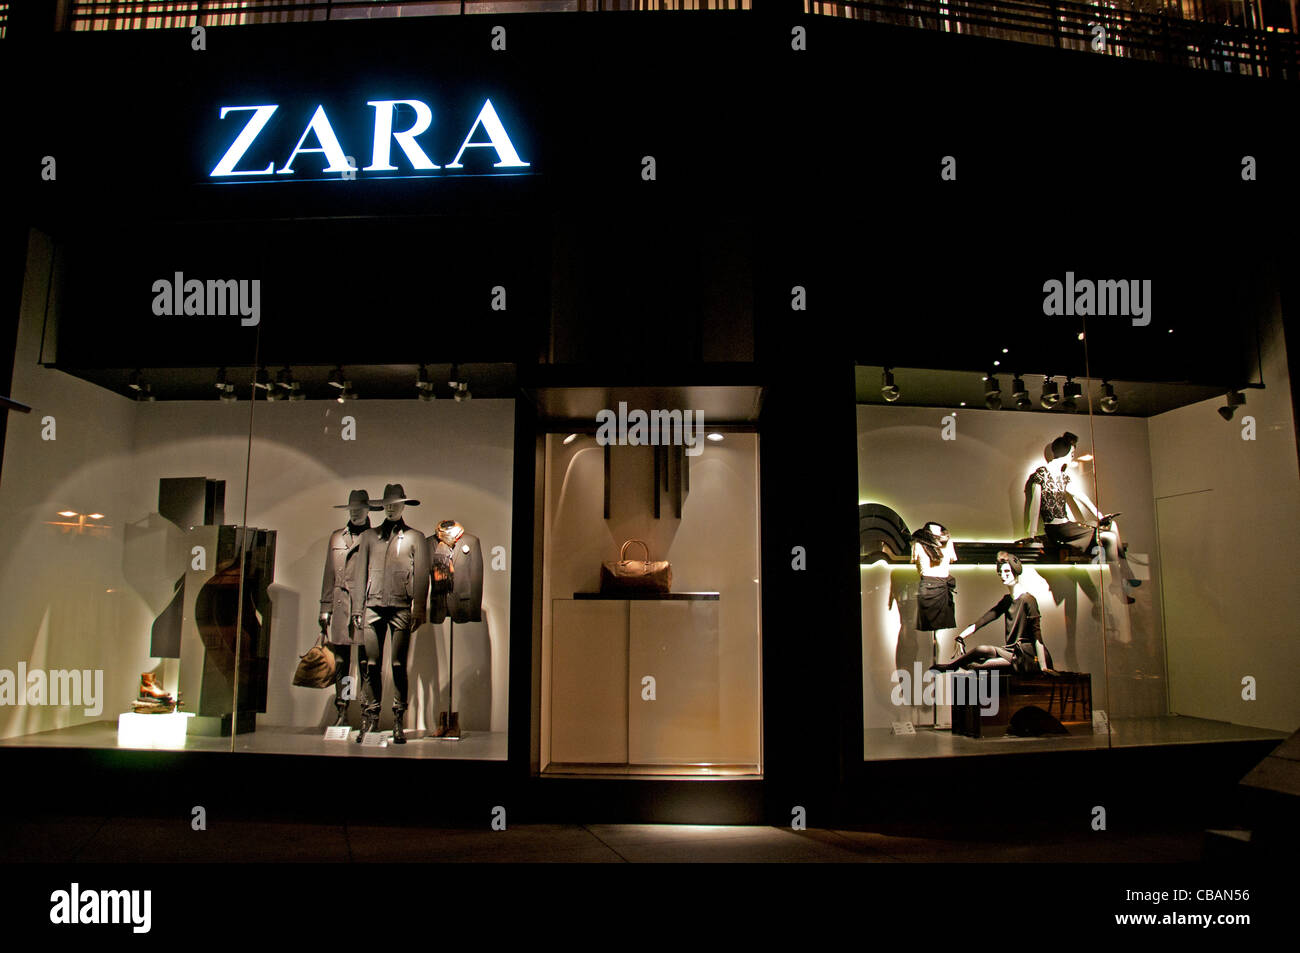 Zara man hi-res stock photography and images - Alamy